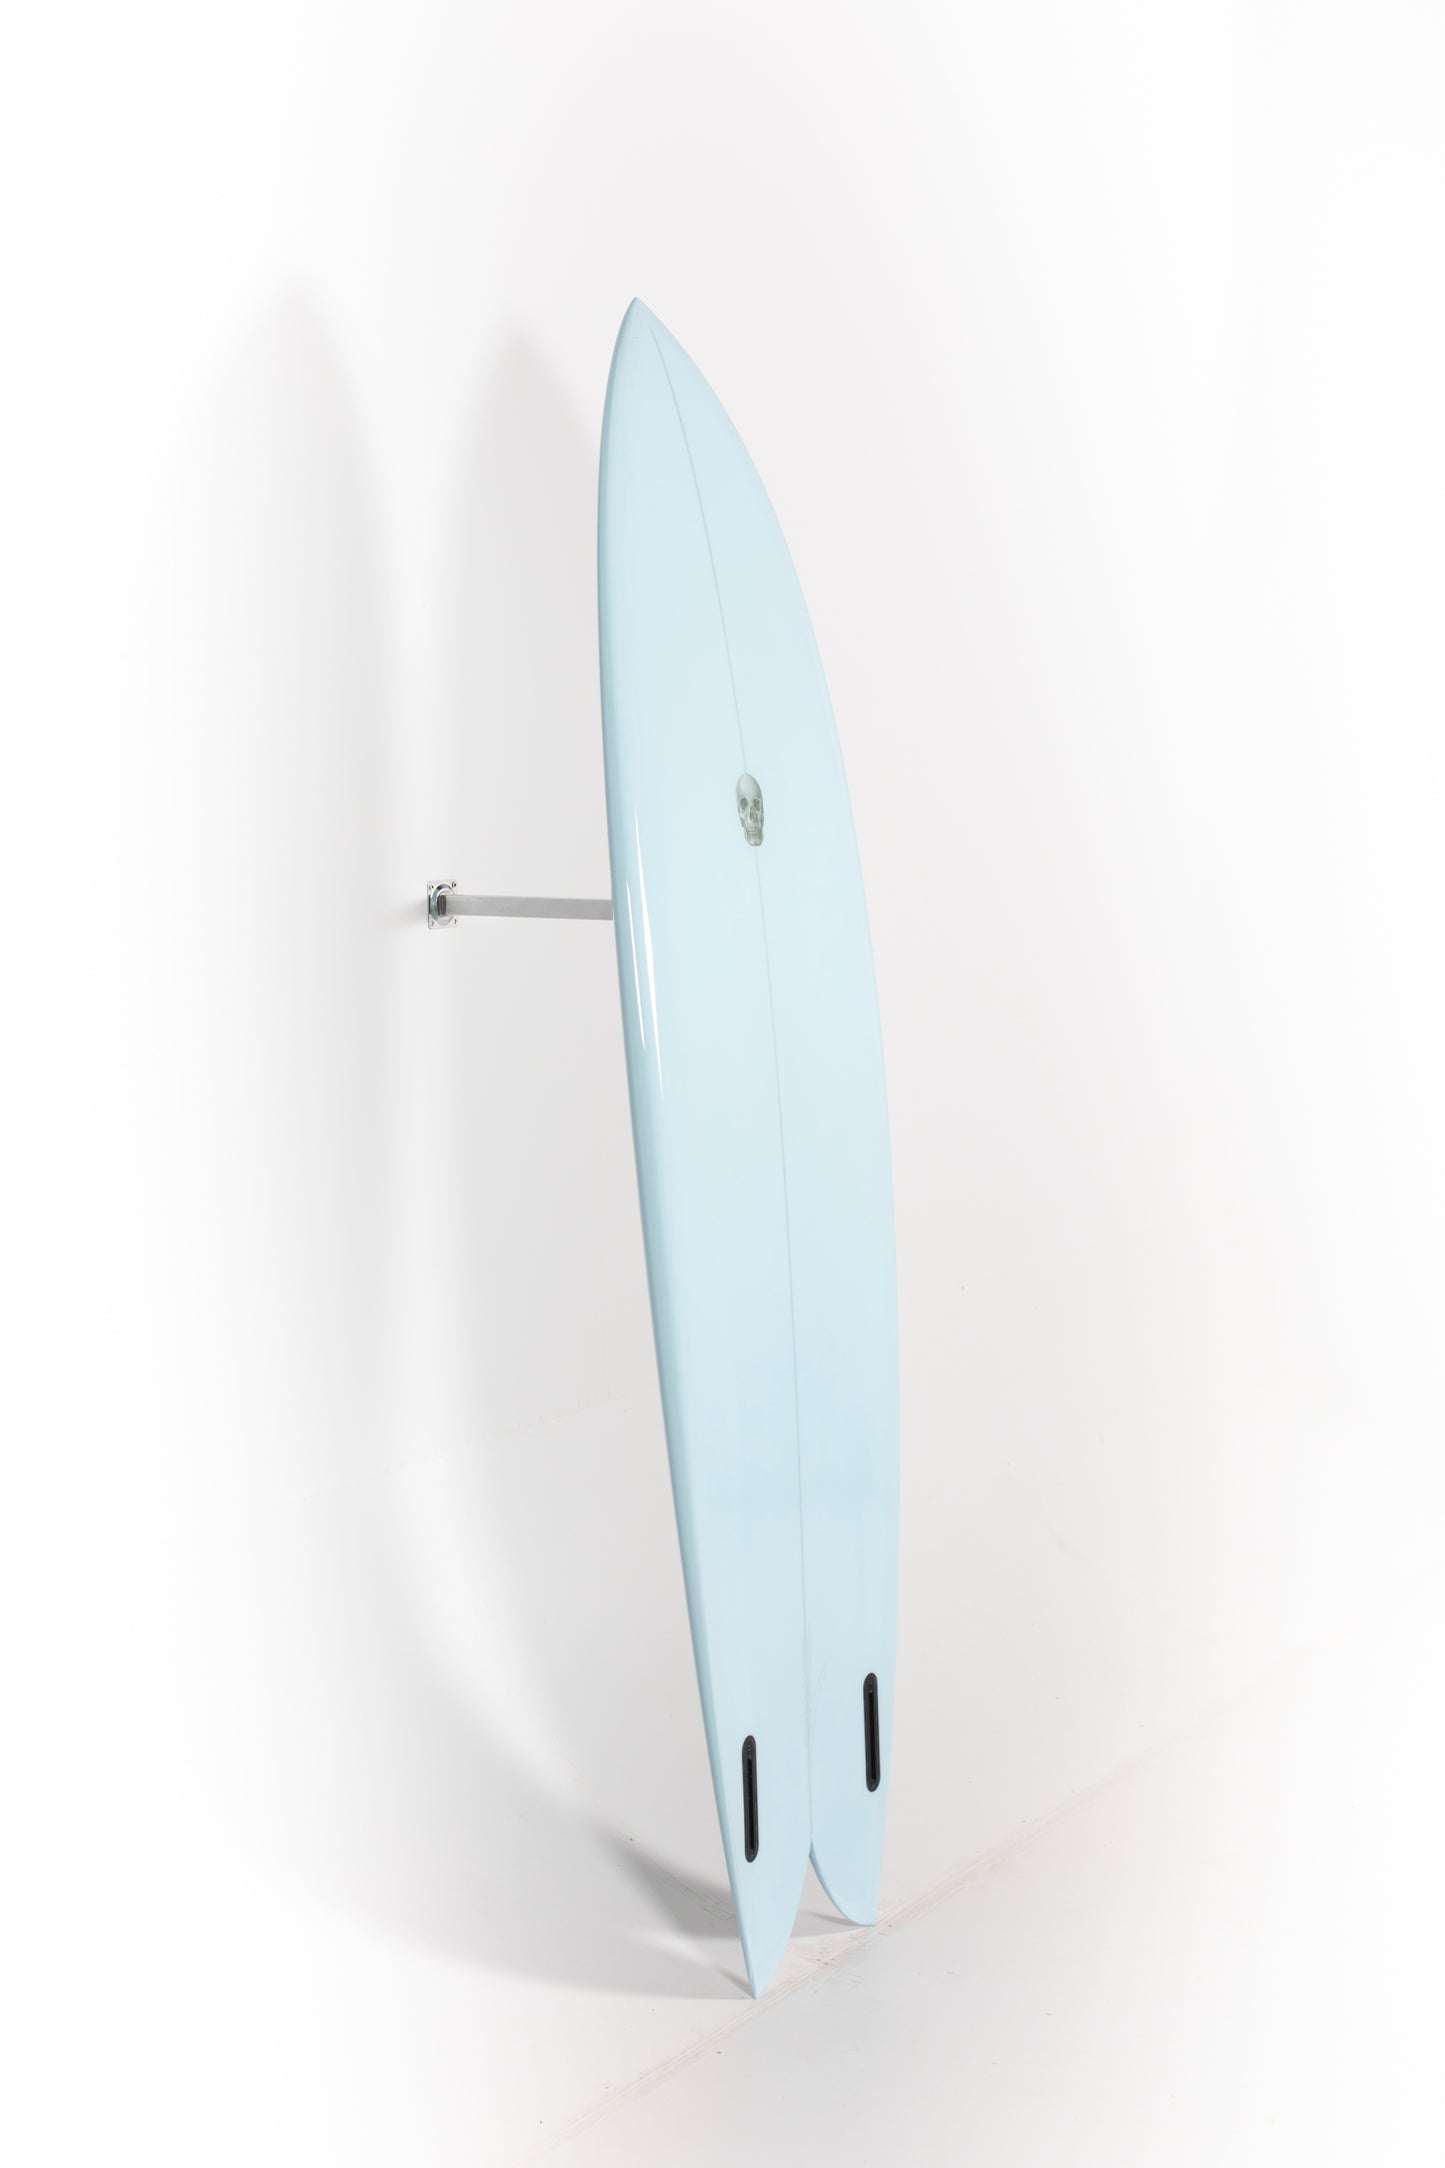 
                  
                    Pukas Surf Shop - Christenson Surfboards - LONG PHISH - 6'8" x 20 3/4 x 2 9/16 - CX03031
                  
                